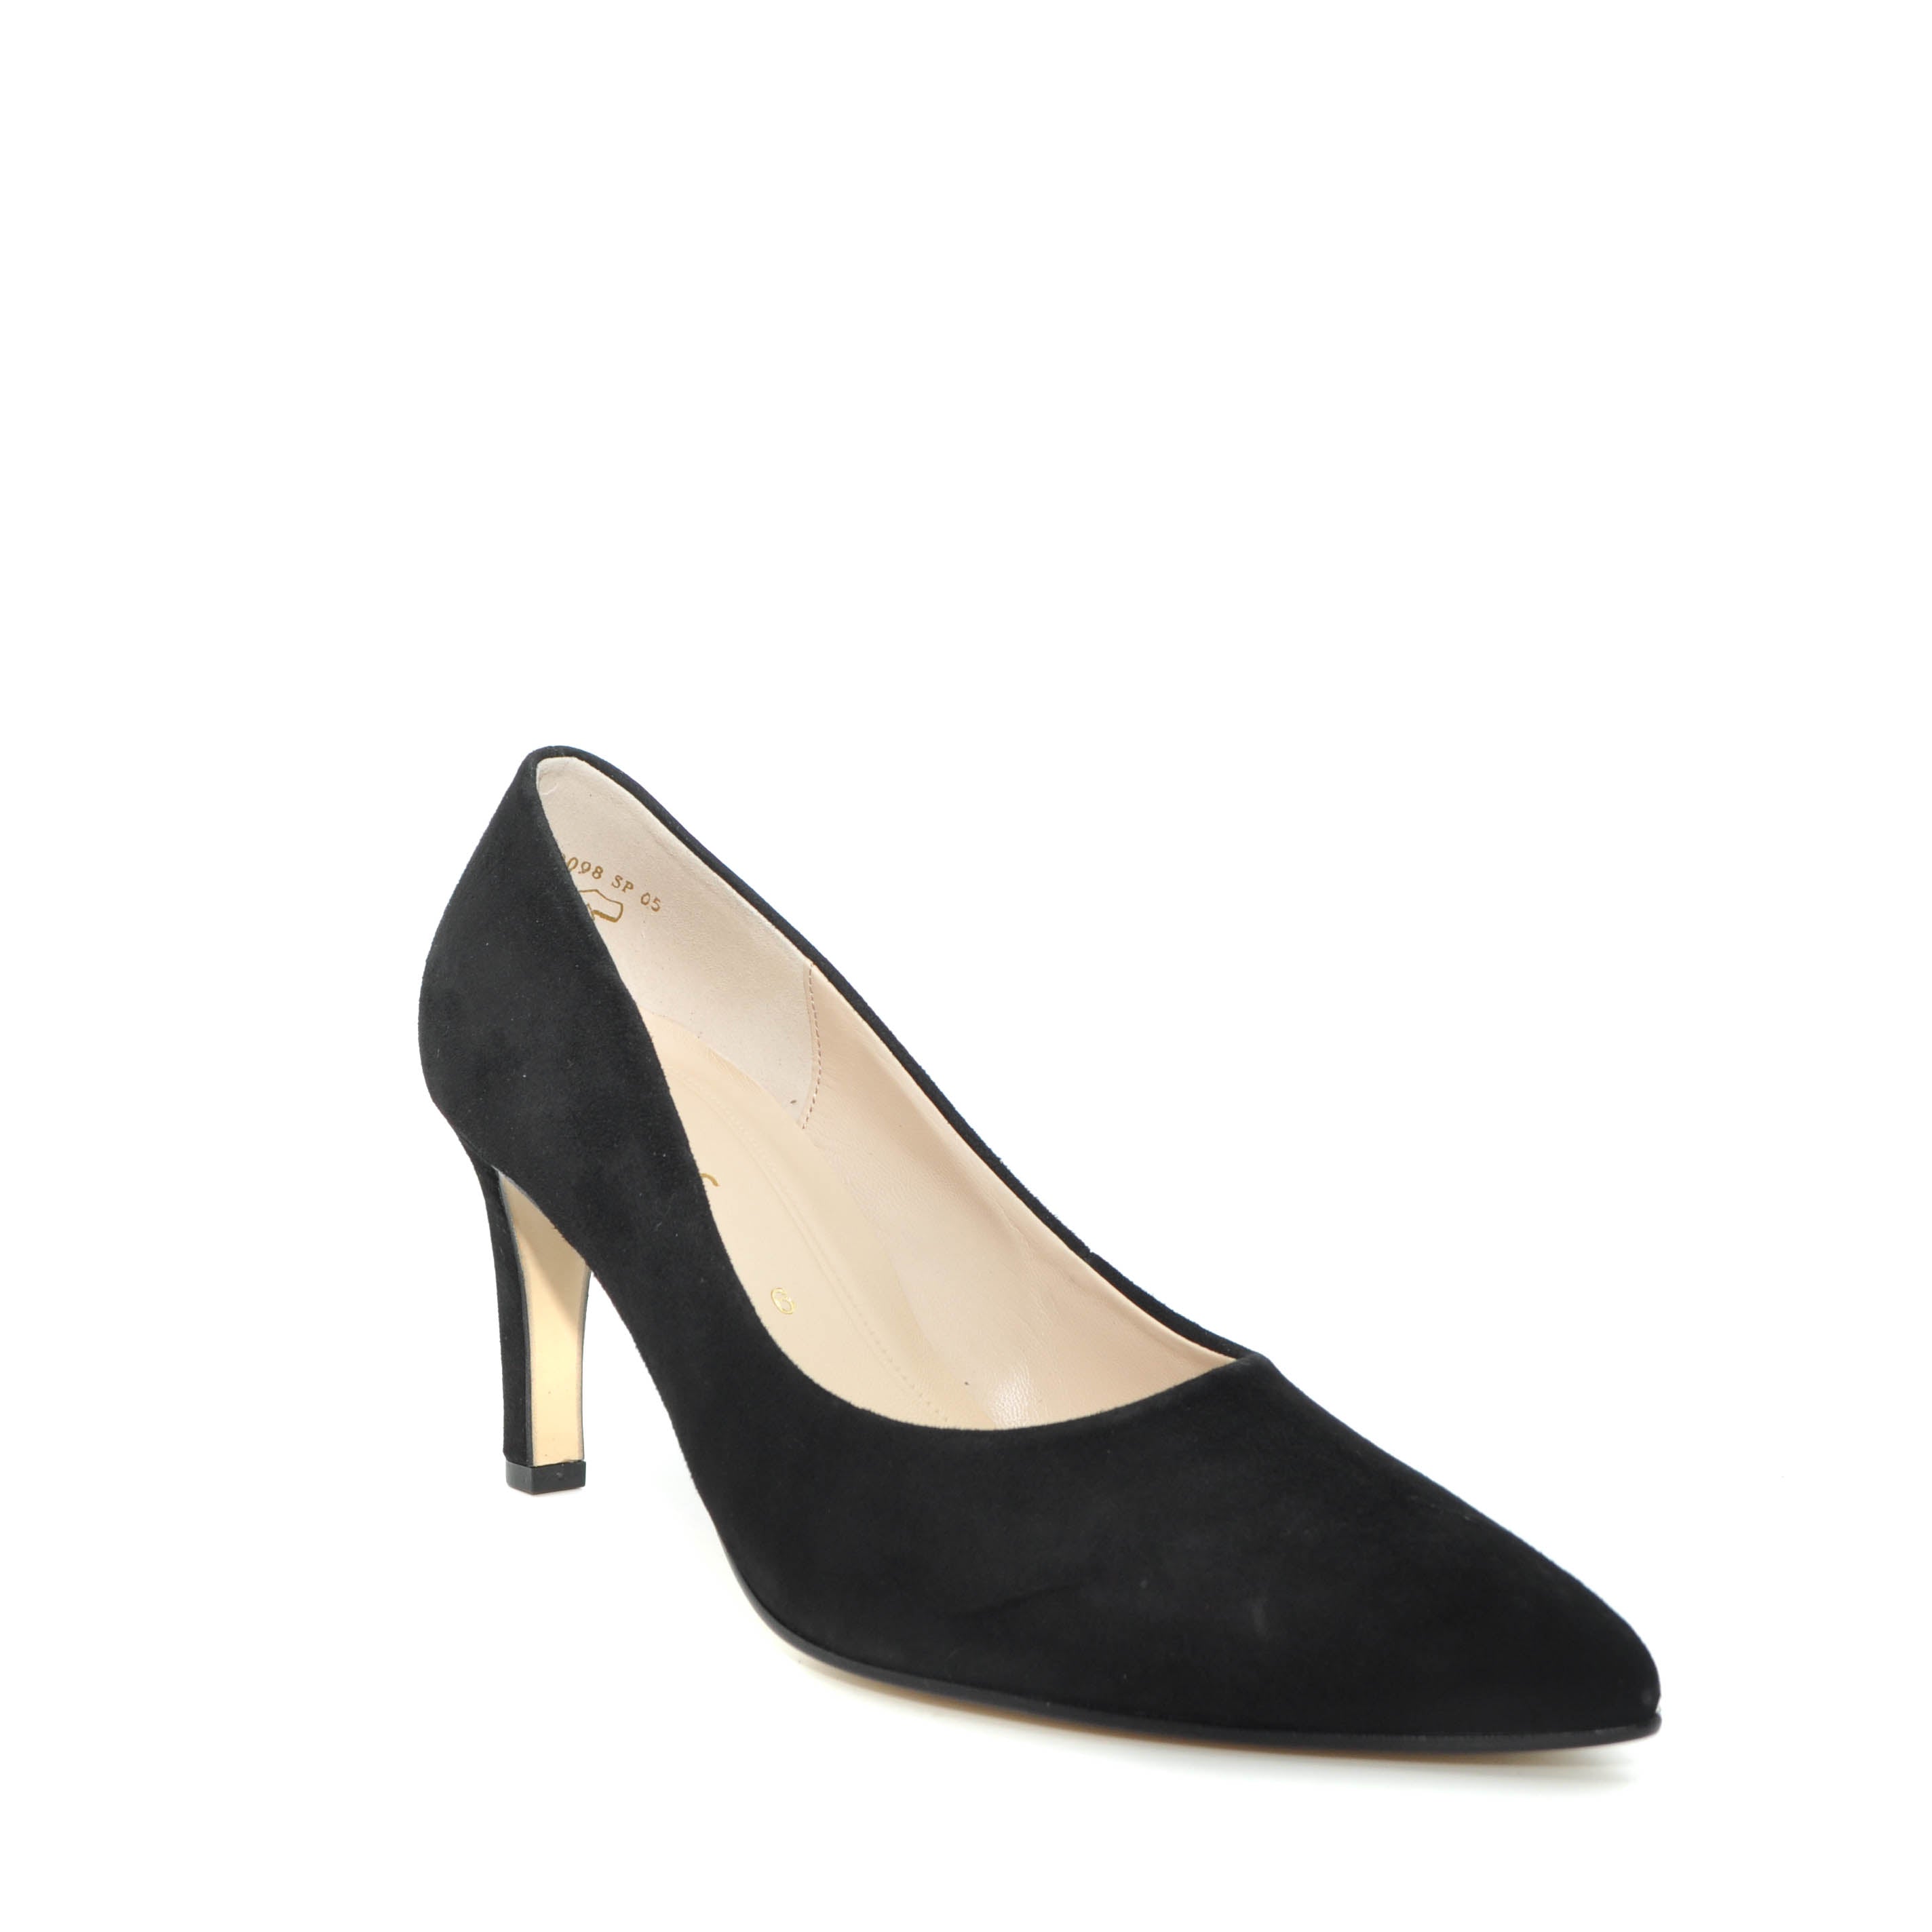 shoes online ireland | ladies | black heels